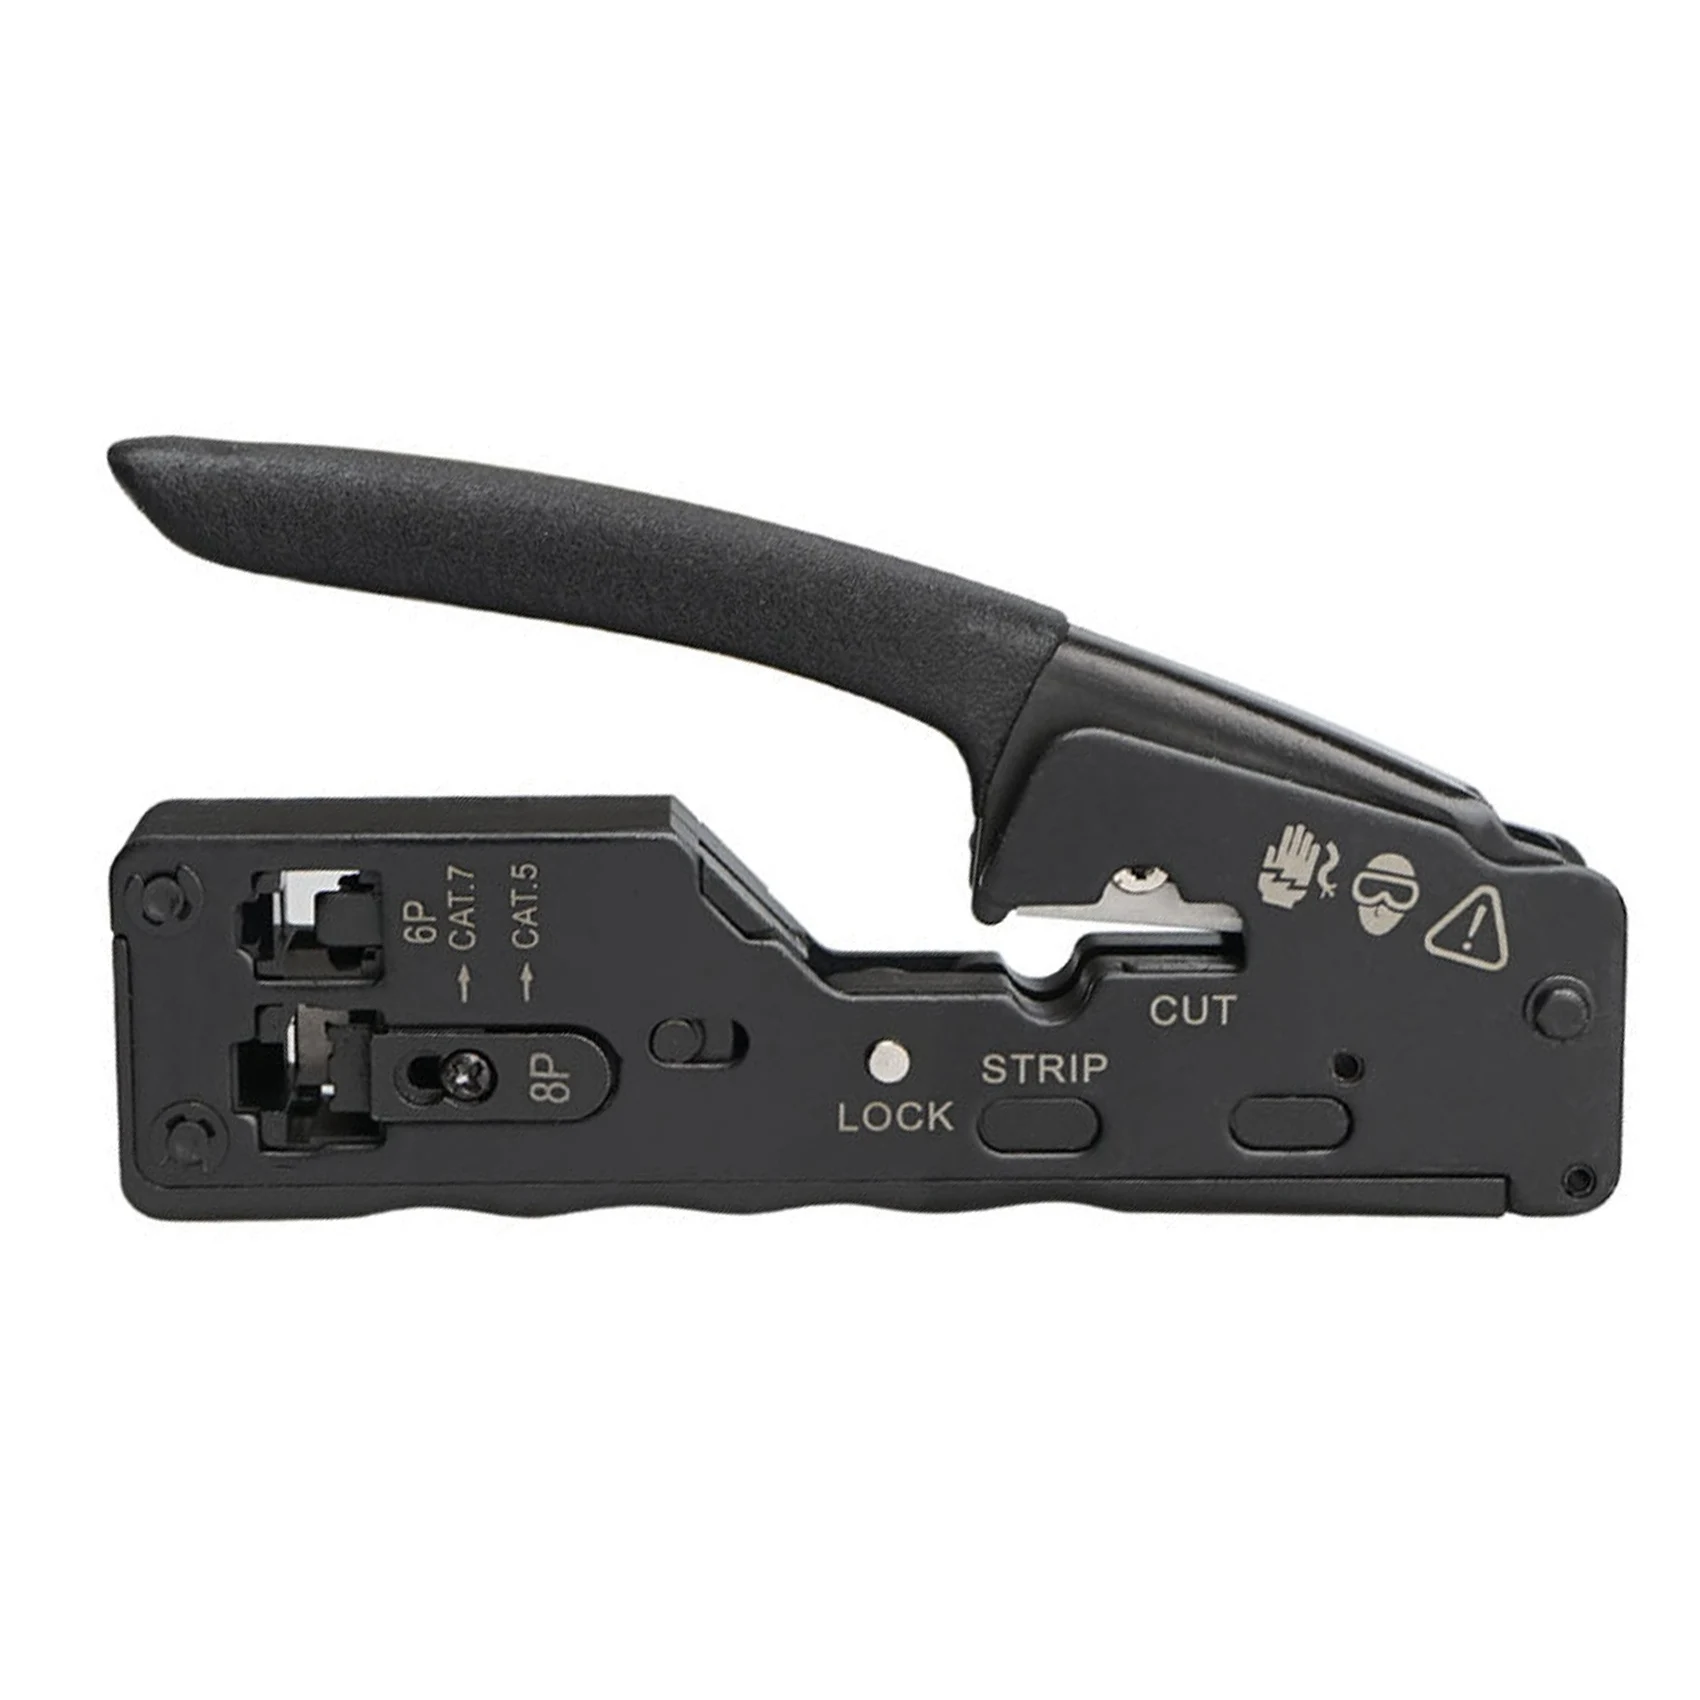 

Network Cable Crimper RJ45 Crimp Tool Cutter Stripper for Rj45 Cat7 Cat6 Cat5 Rj11 Rj12 Connector Crimper Pliers